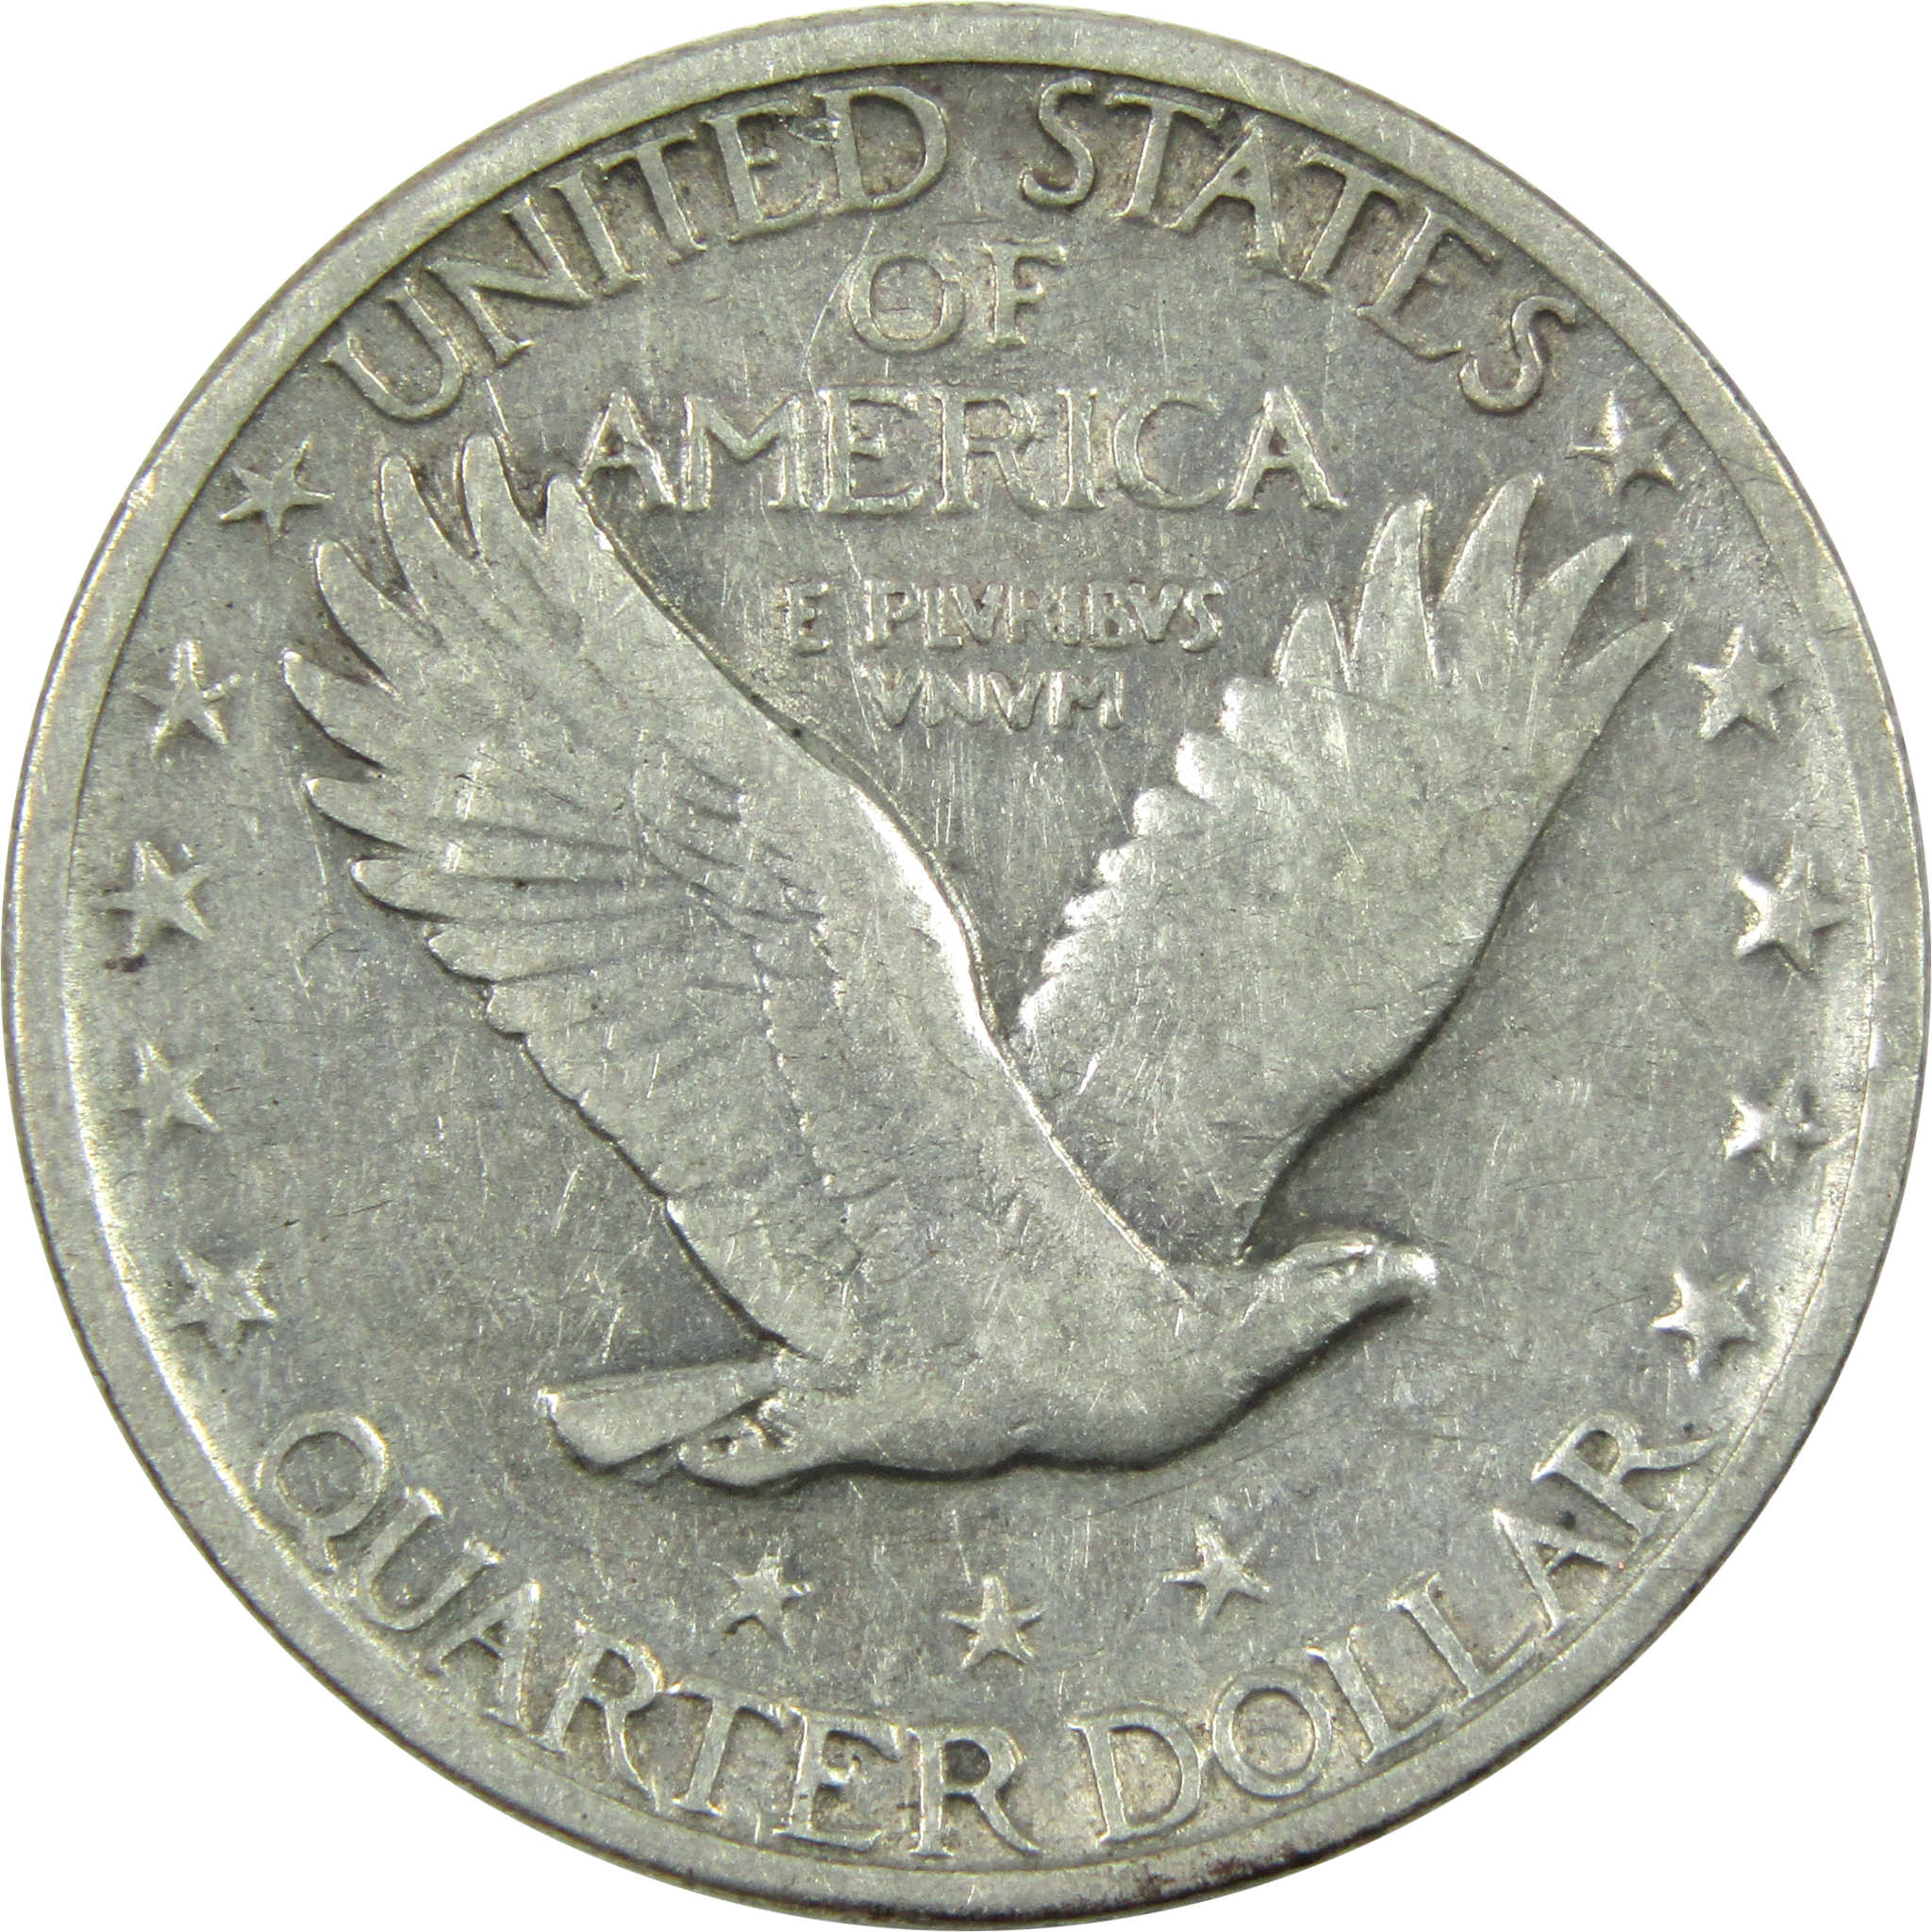 1927 S Standing Liberty Quarter F Fine Silver 25c Coin SKU:I14040